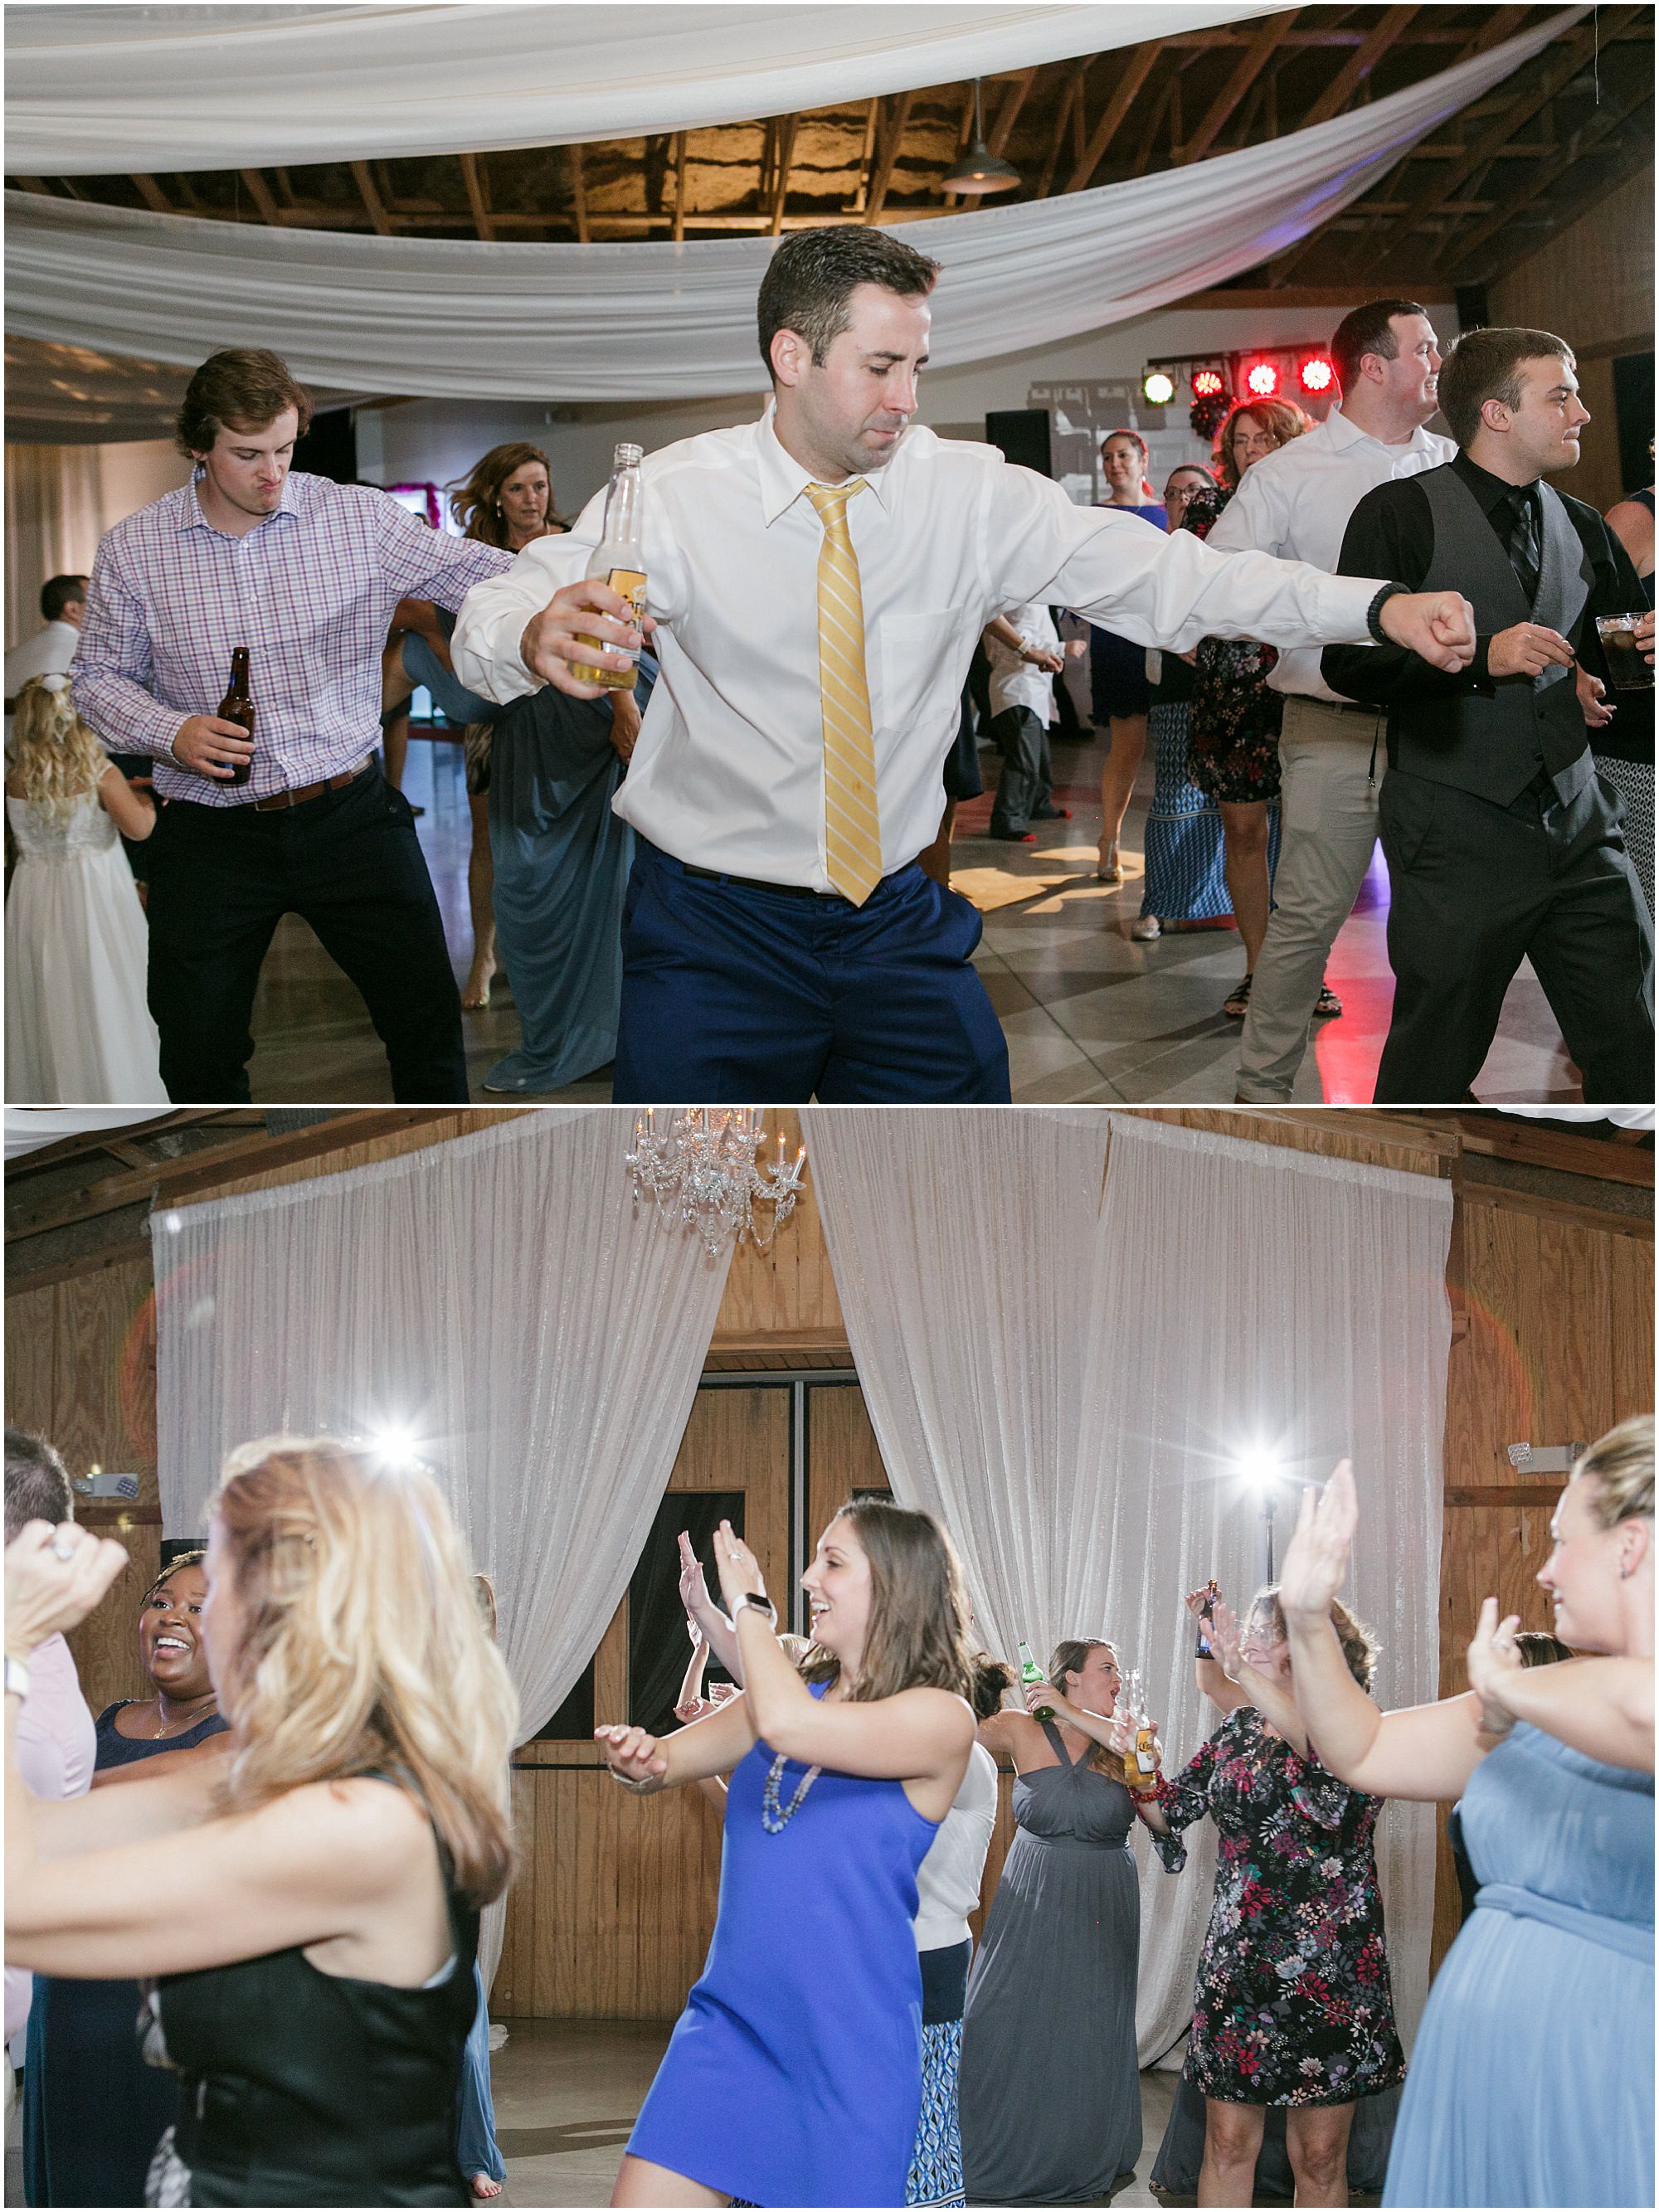 Guests dancing at wedding reception. 